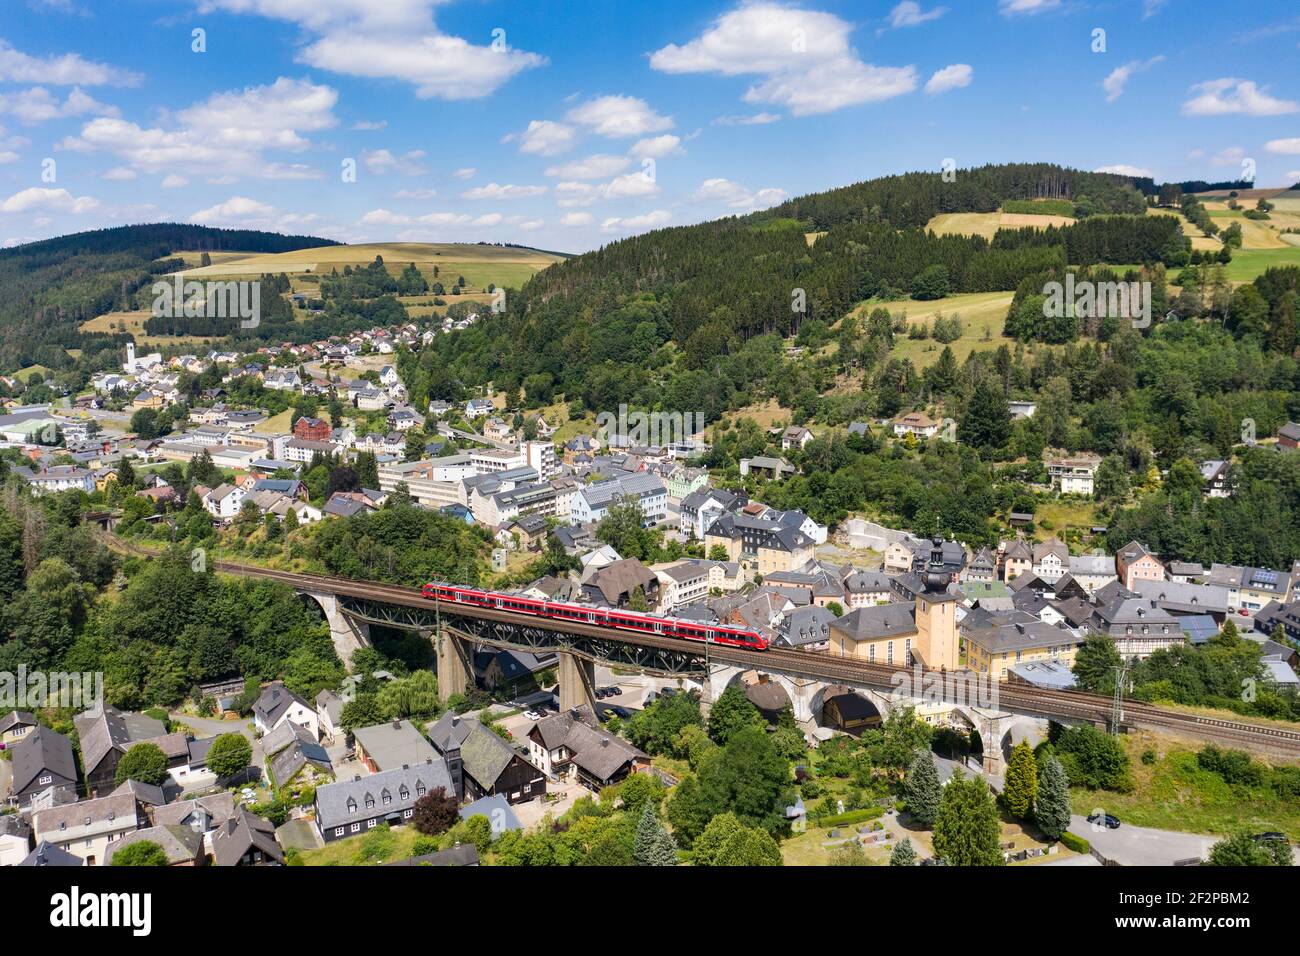 Germania, Baviera, Ludwigsstadt, Zug, Nürnberg - Lipsia, ponte, città, chiesa, case, vista aerea Foto Stock